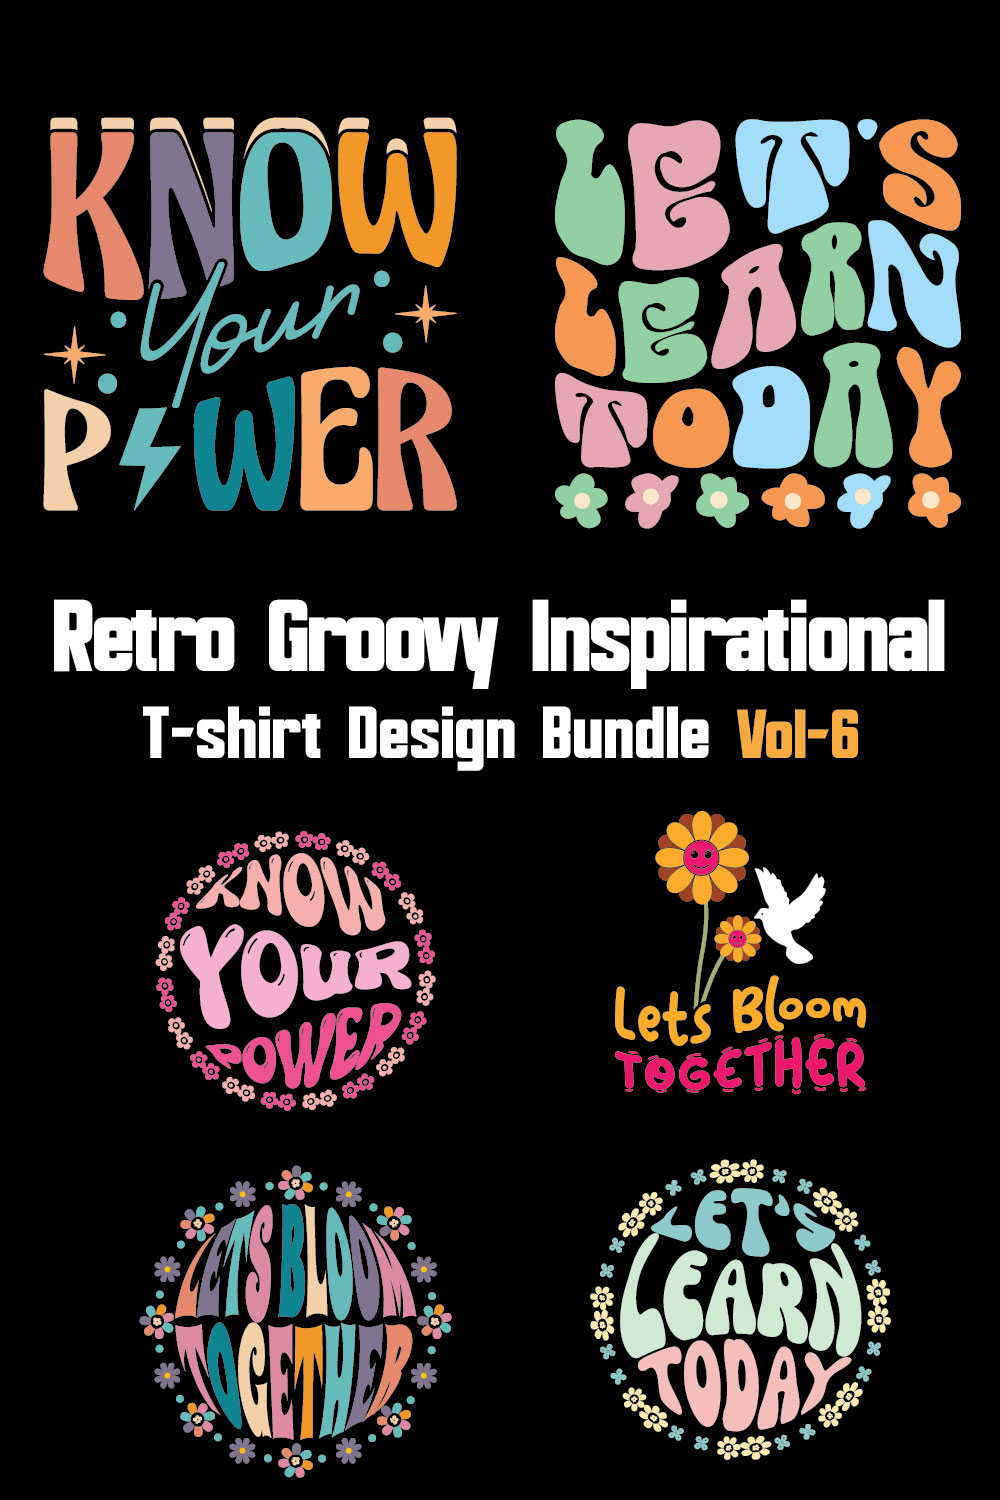 Retro Groovy Inspirational T-shirt Design Bundle Vol-6 pinterest preview image.